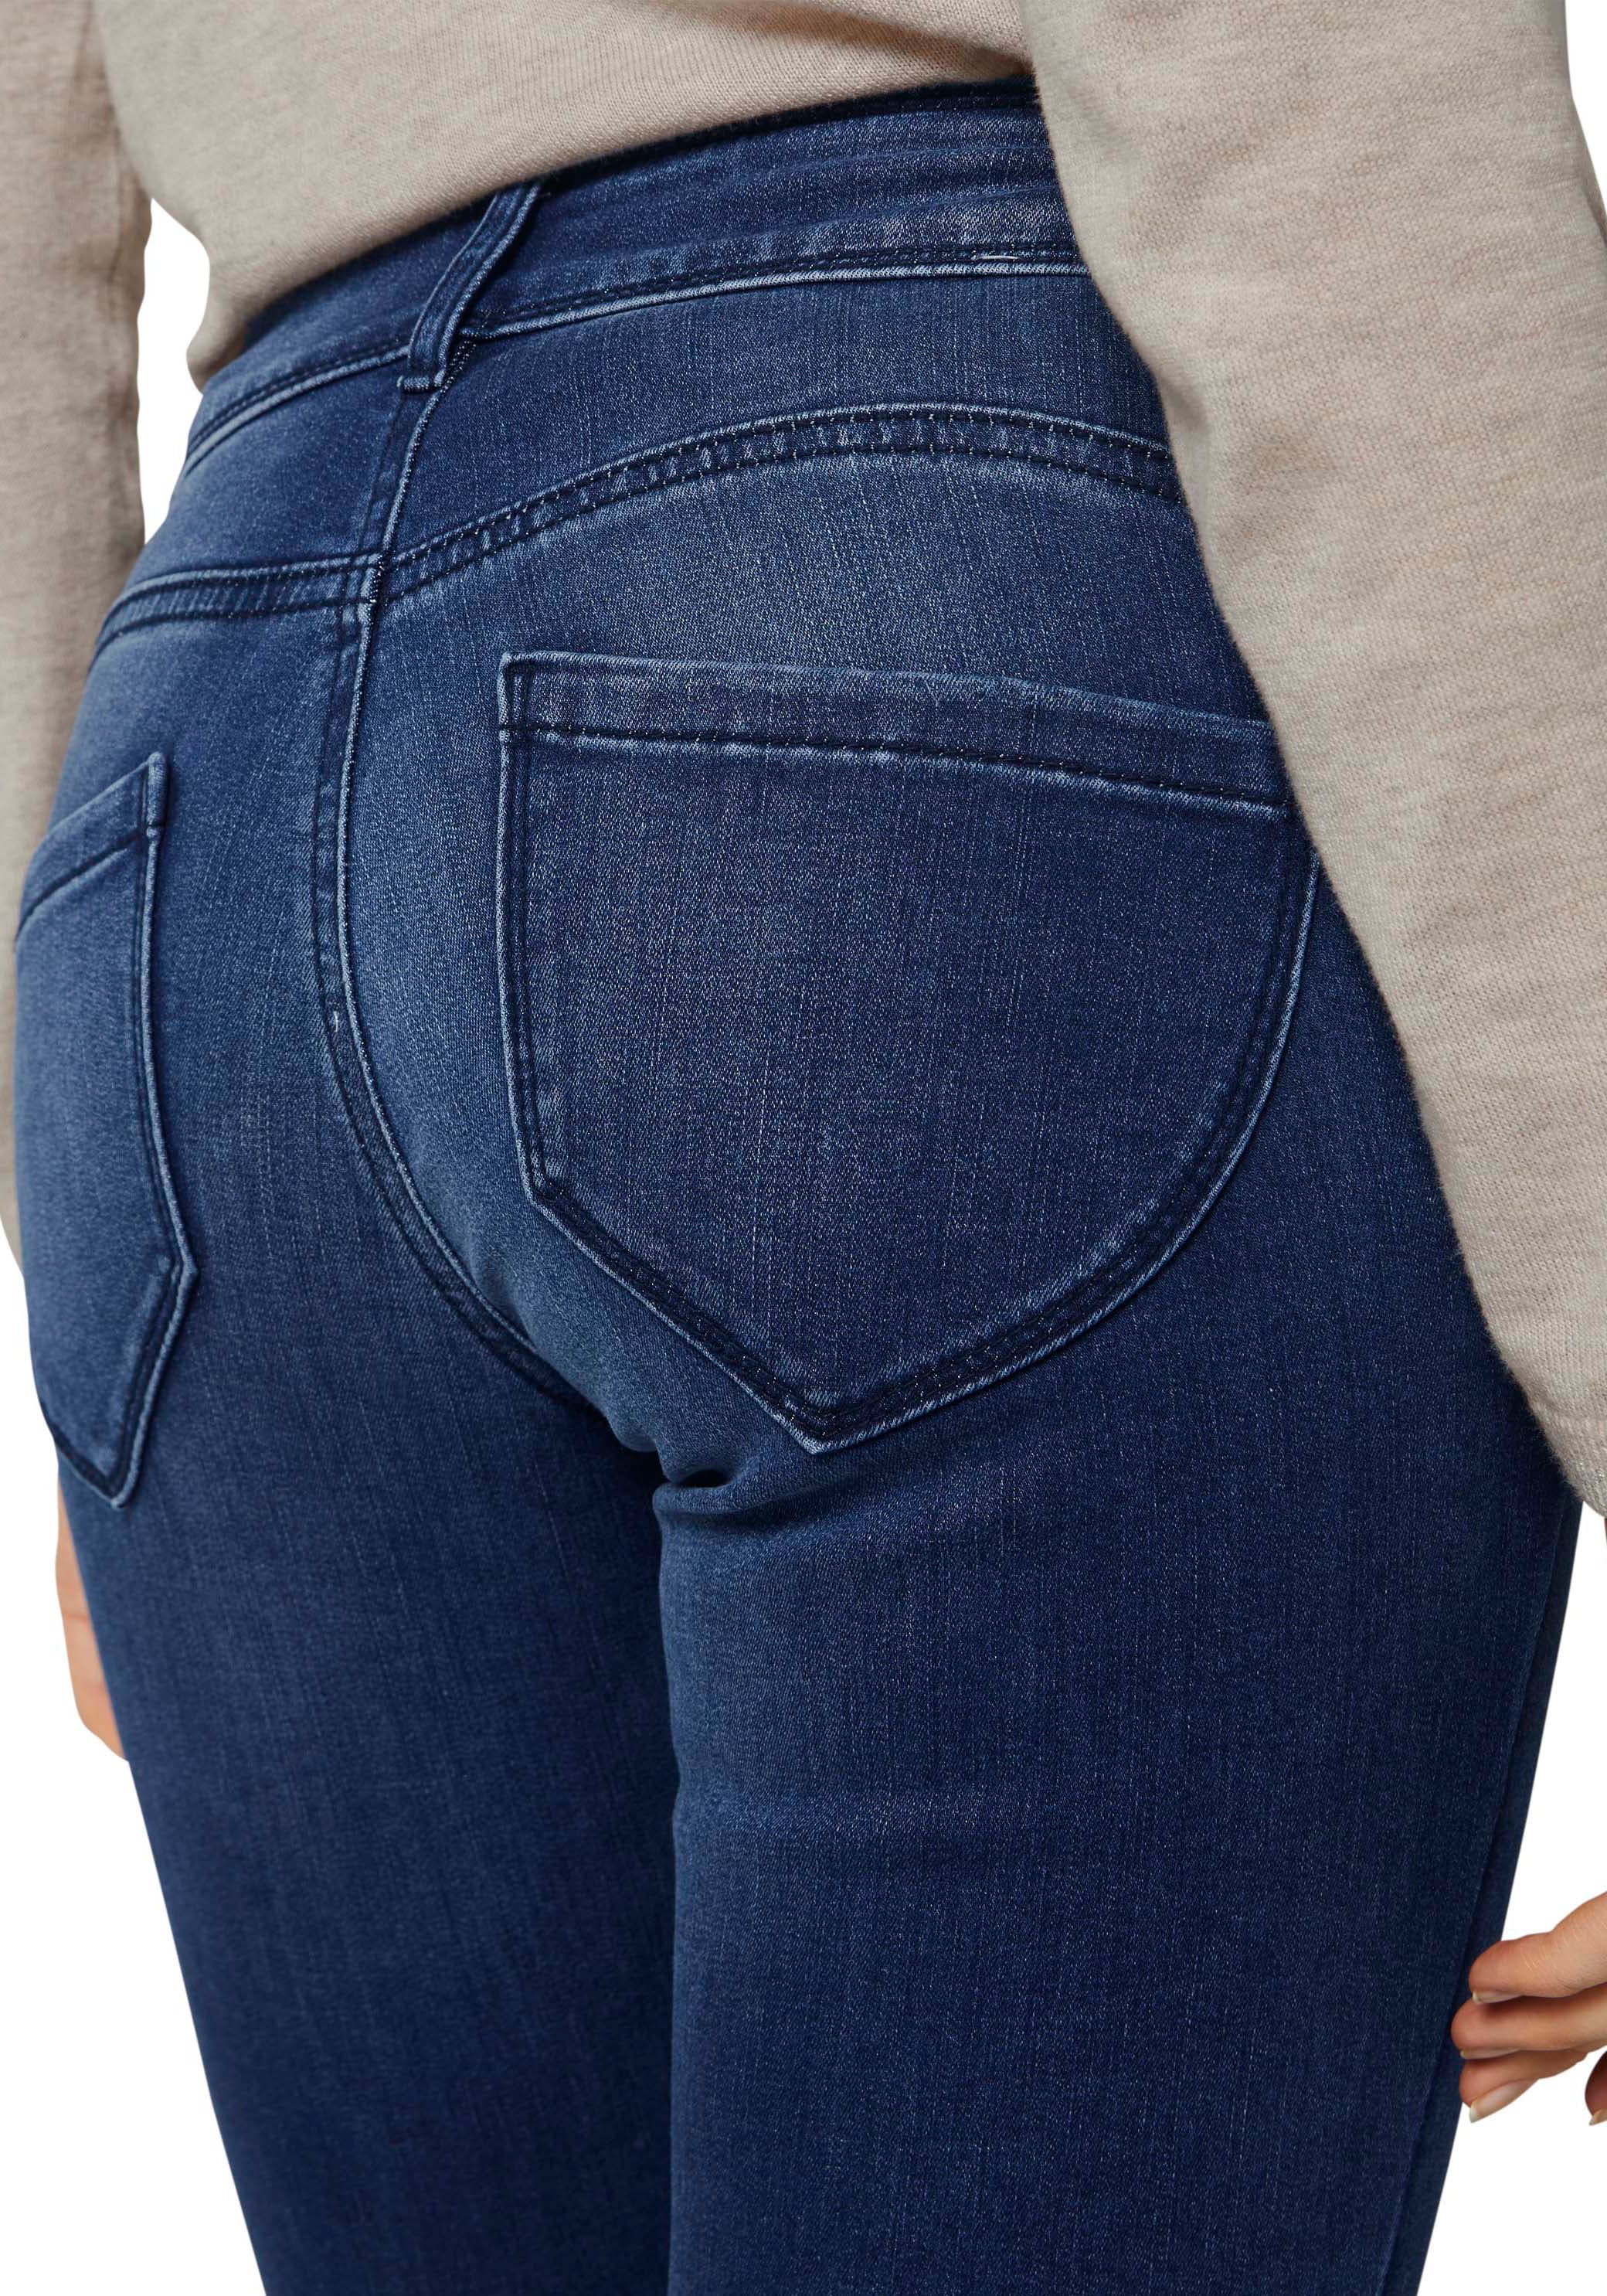 »Alexa Doppelknopf-Verschluss TAILOR Skinny-fit-Jeans bei TOM Skinny«, OTTOversand mit